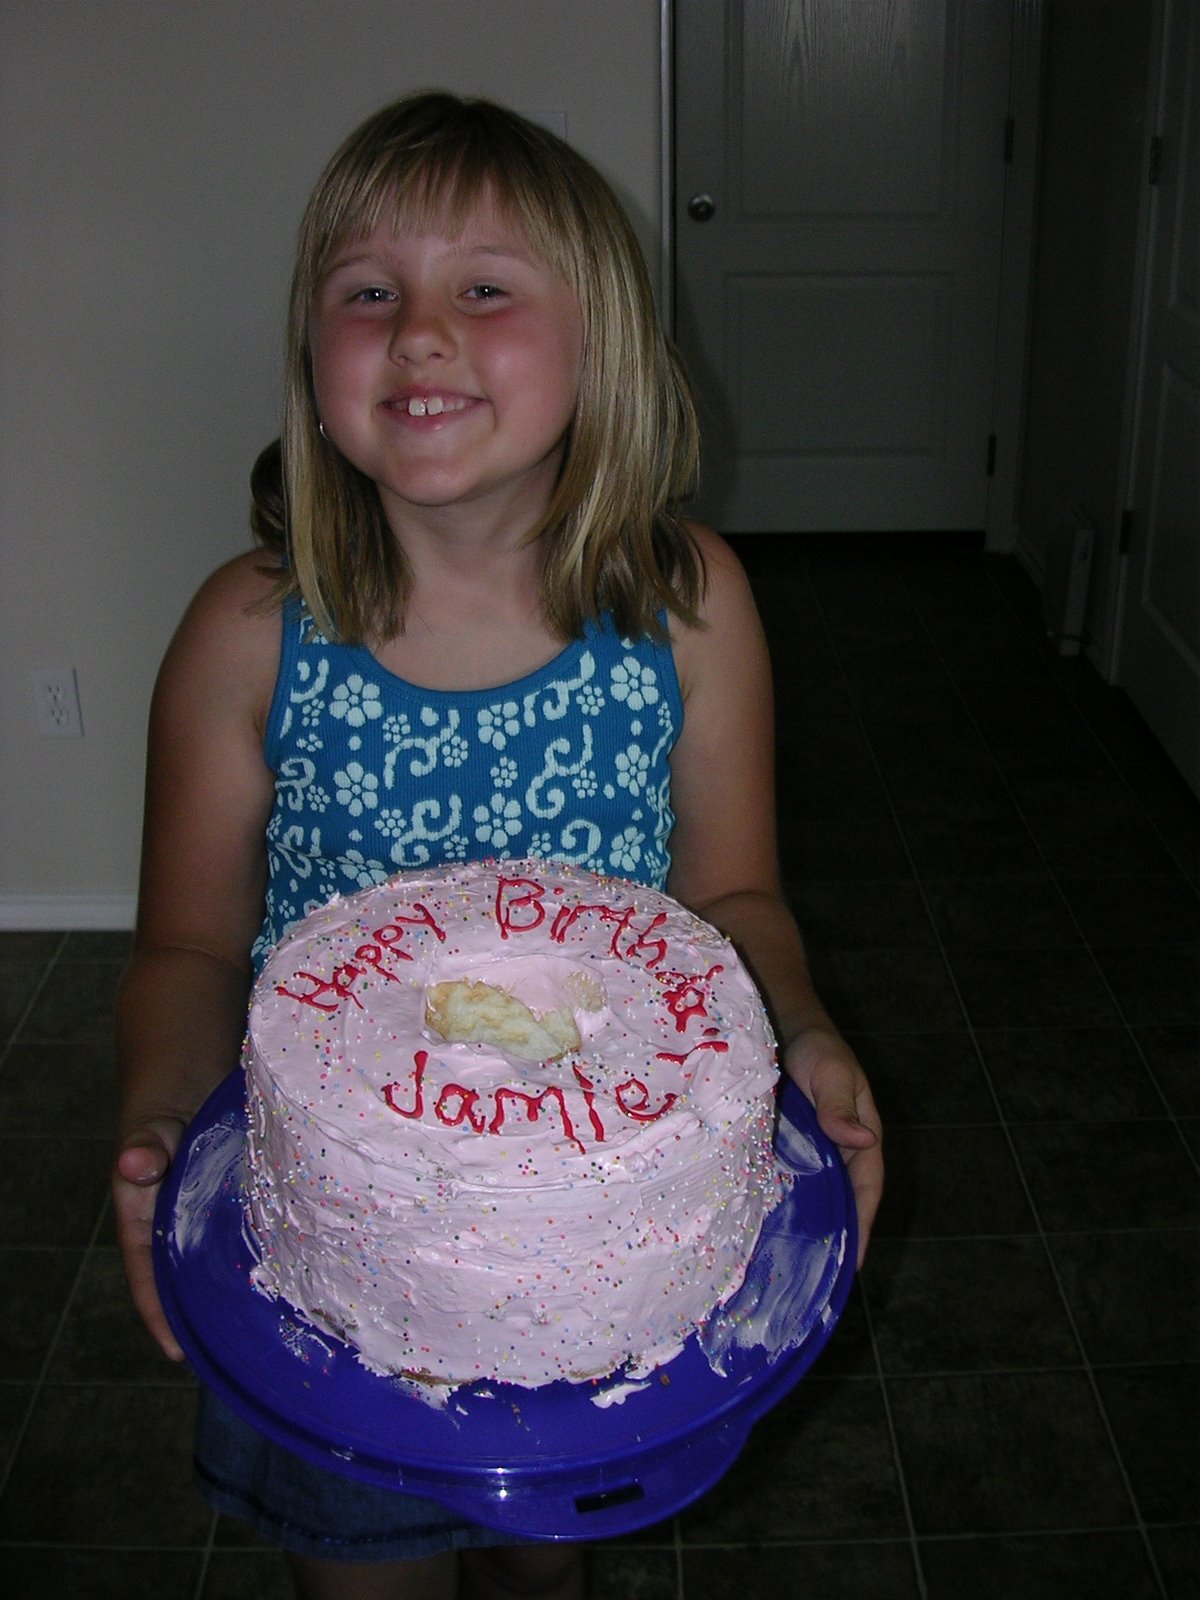 [Jamie+and+birthday+cake.JPG]